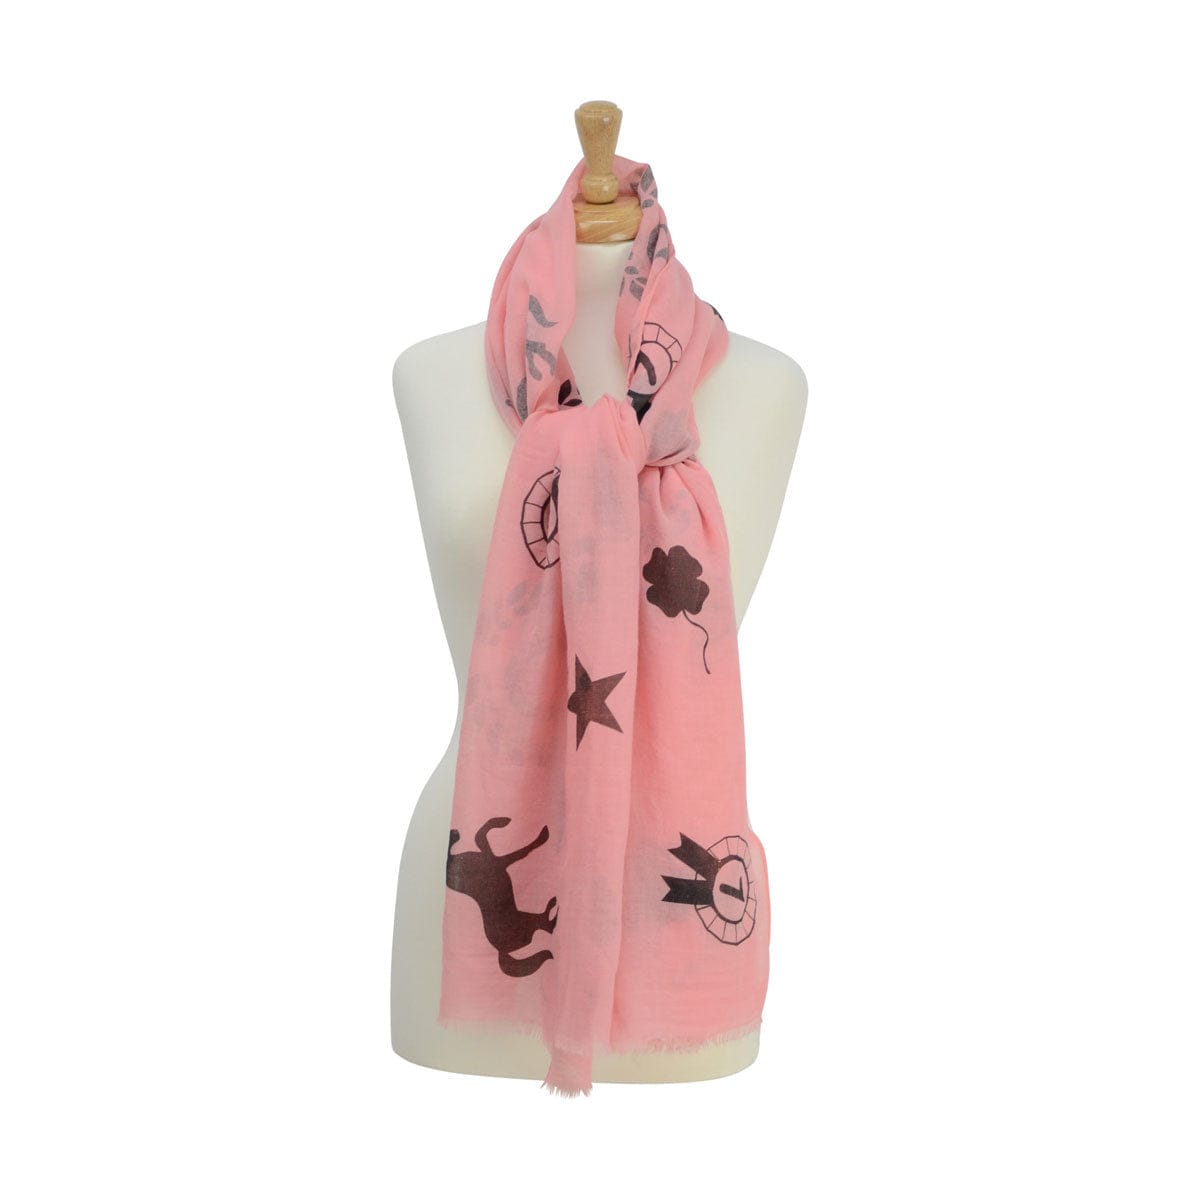 Hyfashion ladies balmoral scarf